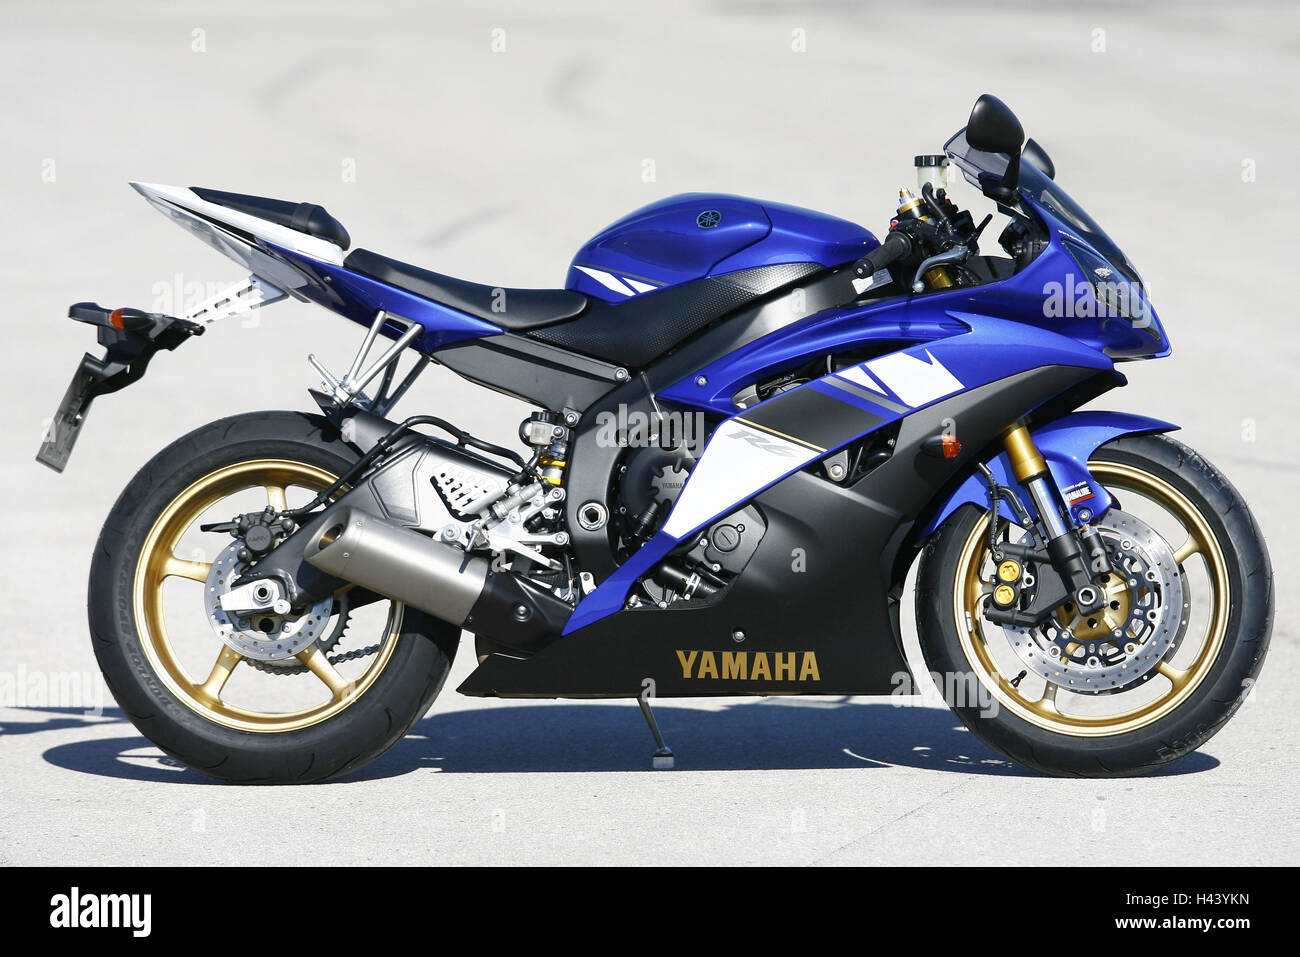 https://c8.alamy.com/comp/H43YKN/great-sport-motorcycle-yamaha-r6-standard-preview-H43YKN.jpg